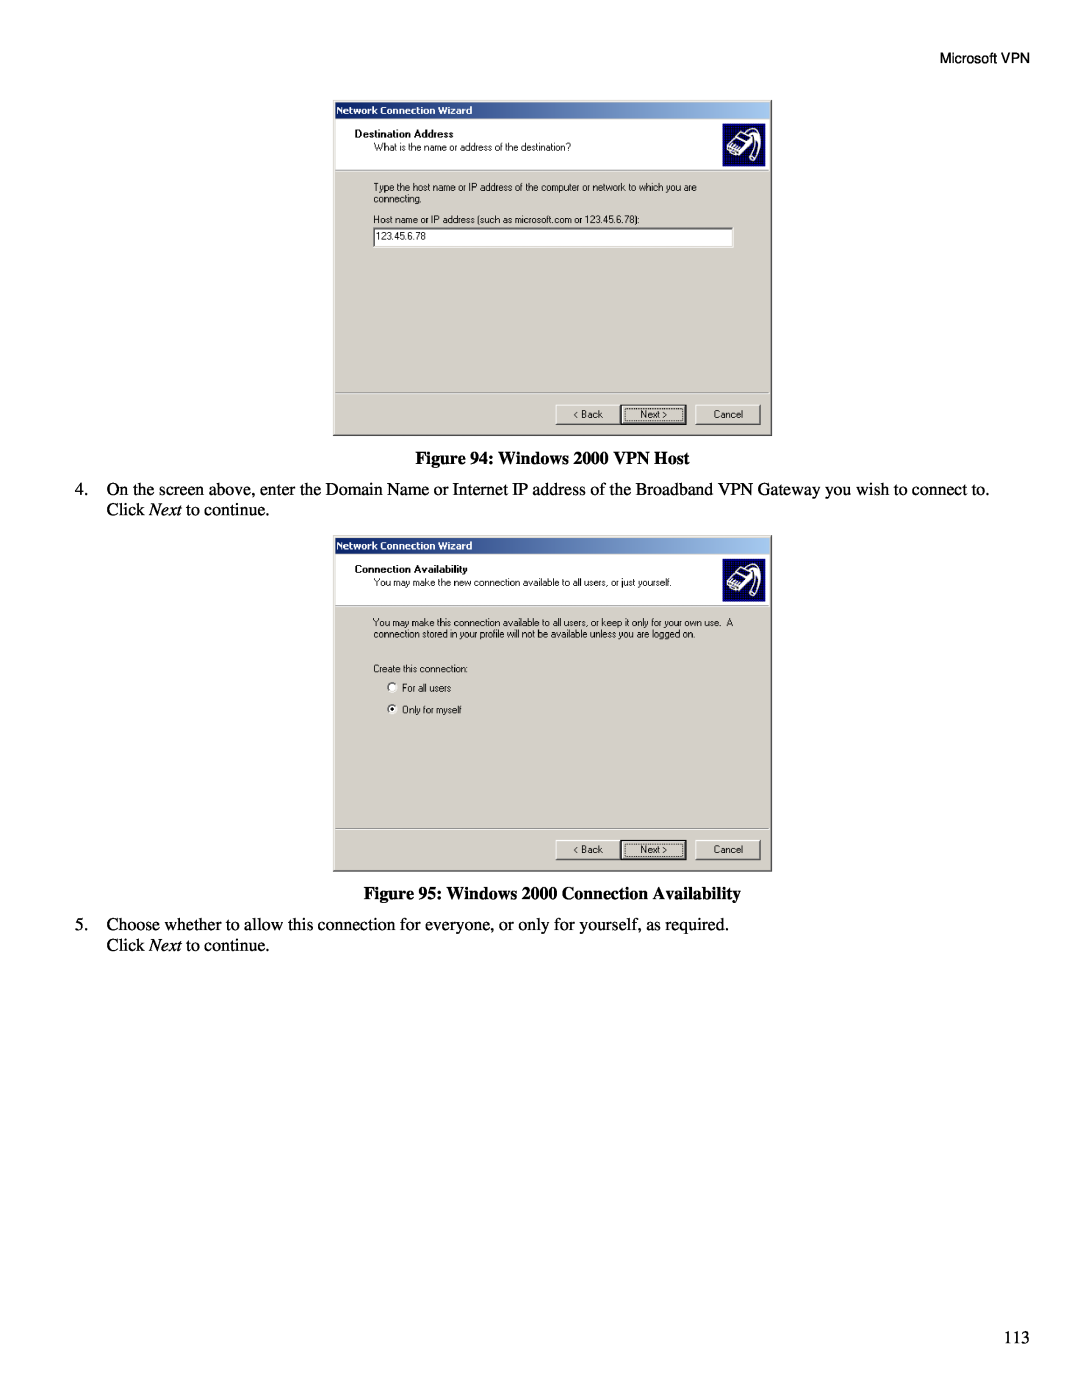 TRENDnet TW100-BRV324 manual Windows 2000 VPN Host, Windows 2000 Connection Availability 